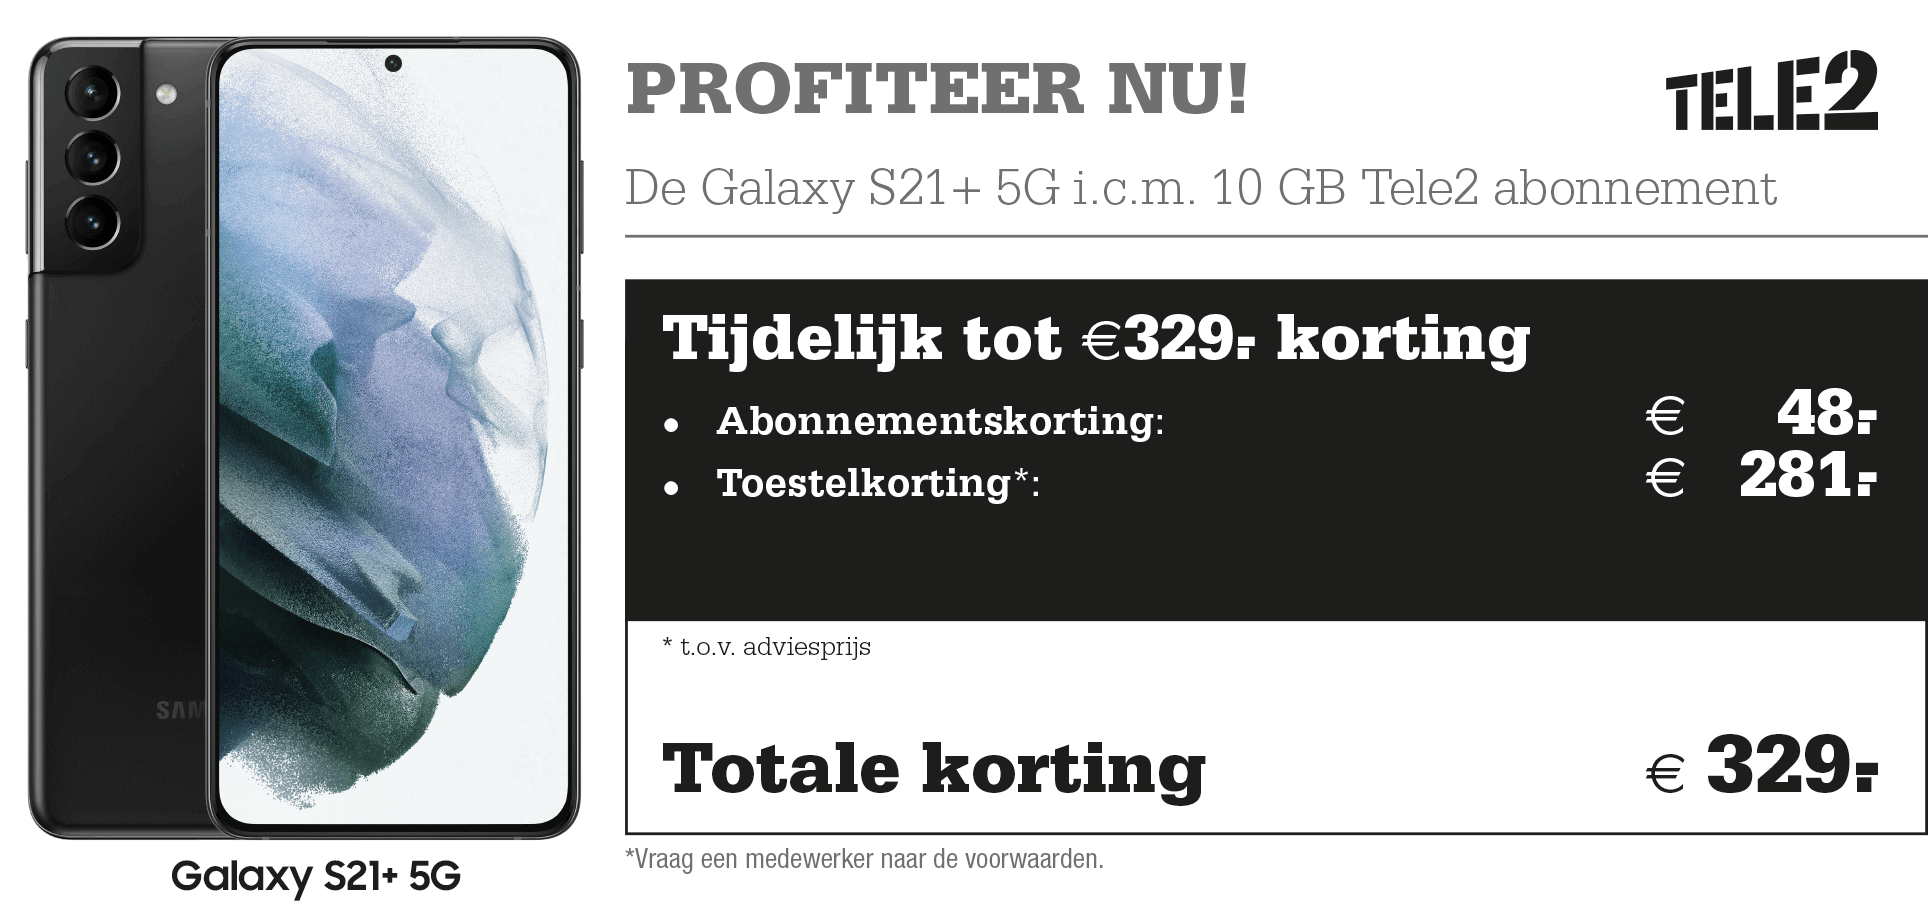 Tele2 Samsung Galaxy S21 €329,- korting